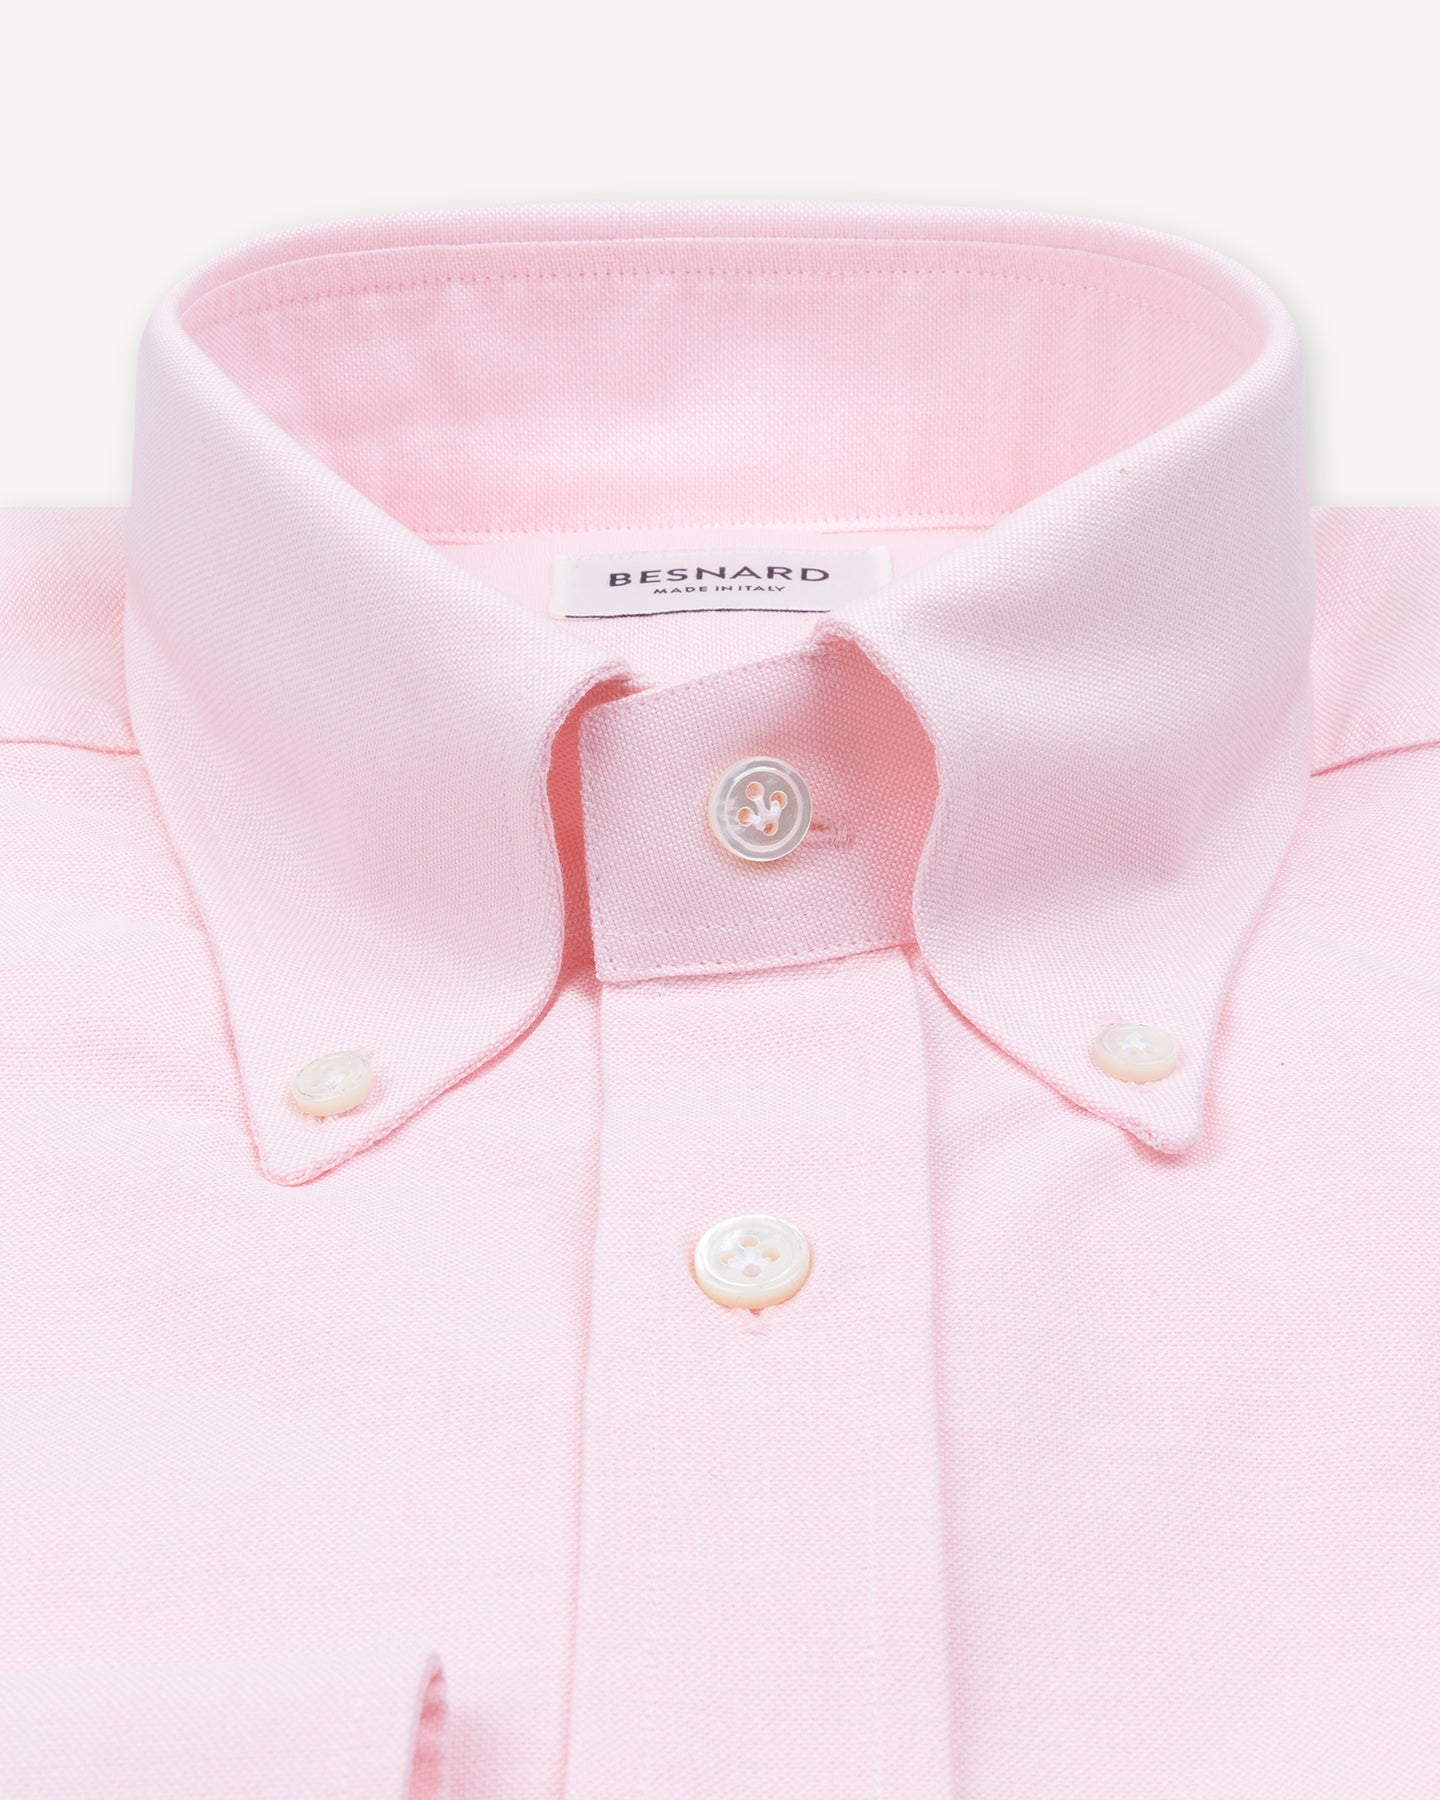 Pink Oxford Cloth Button Down Shirt